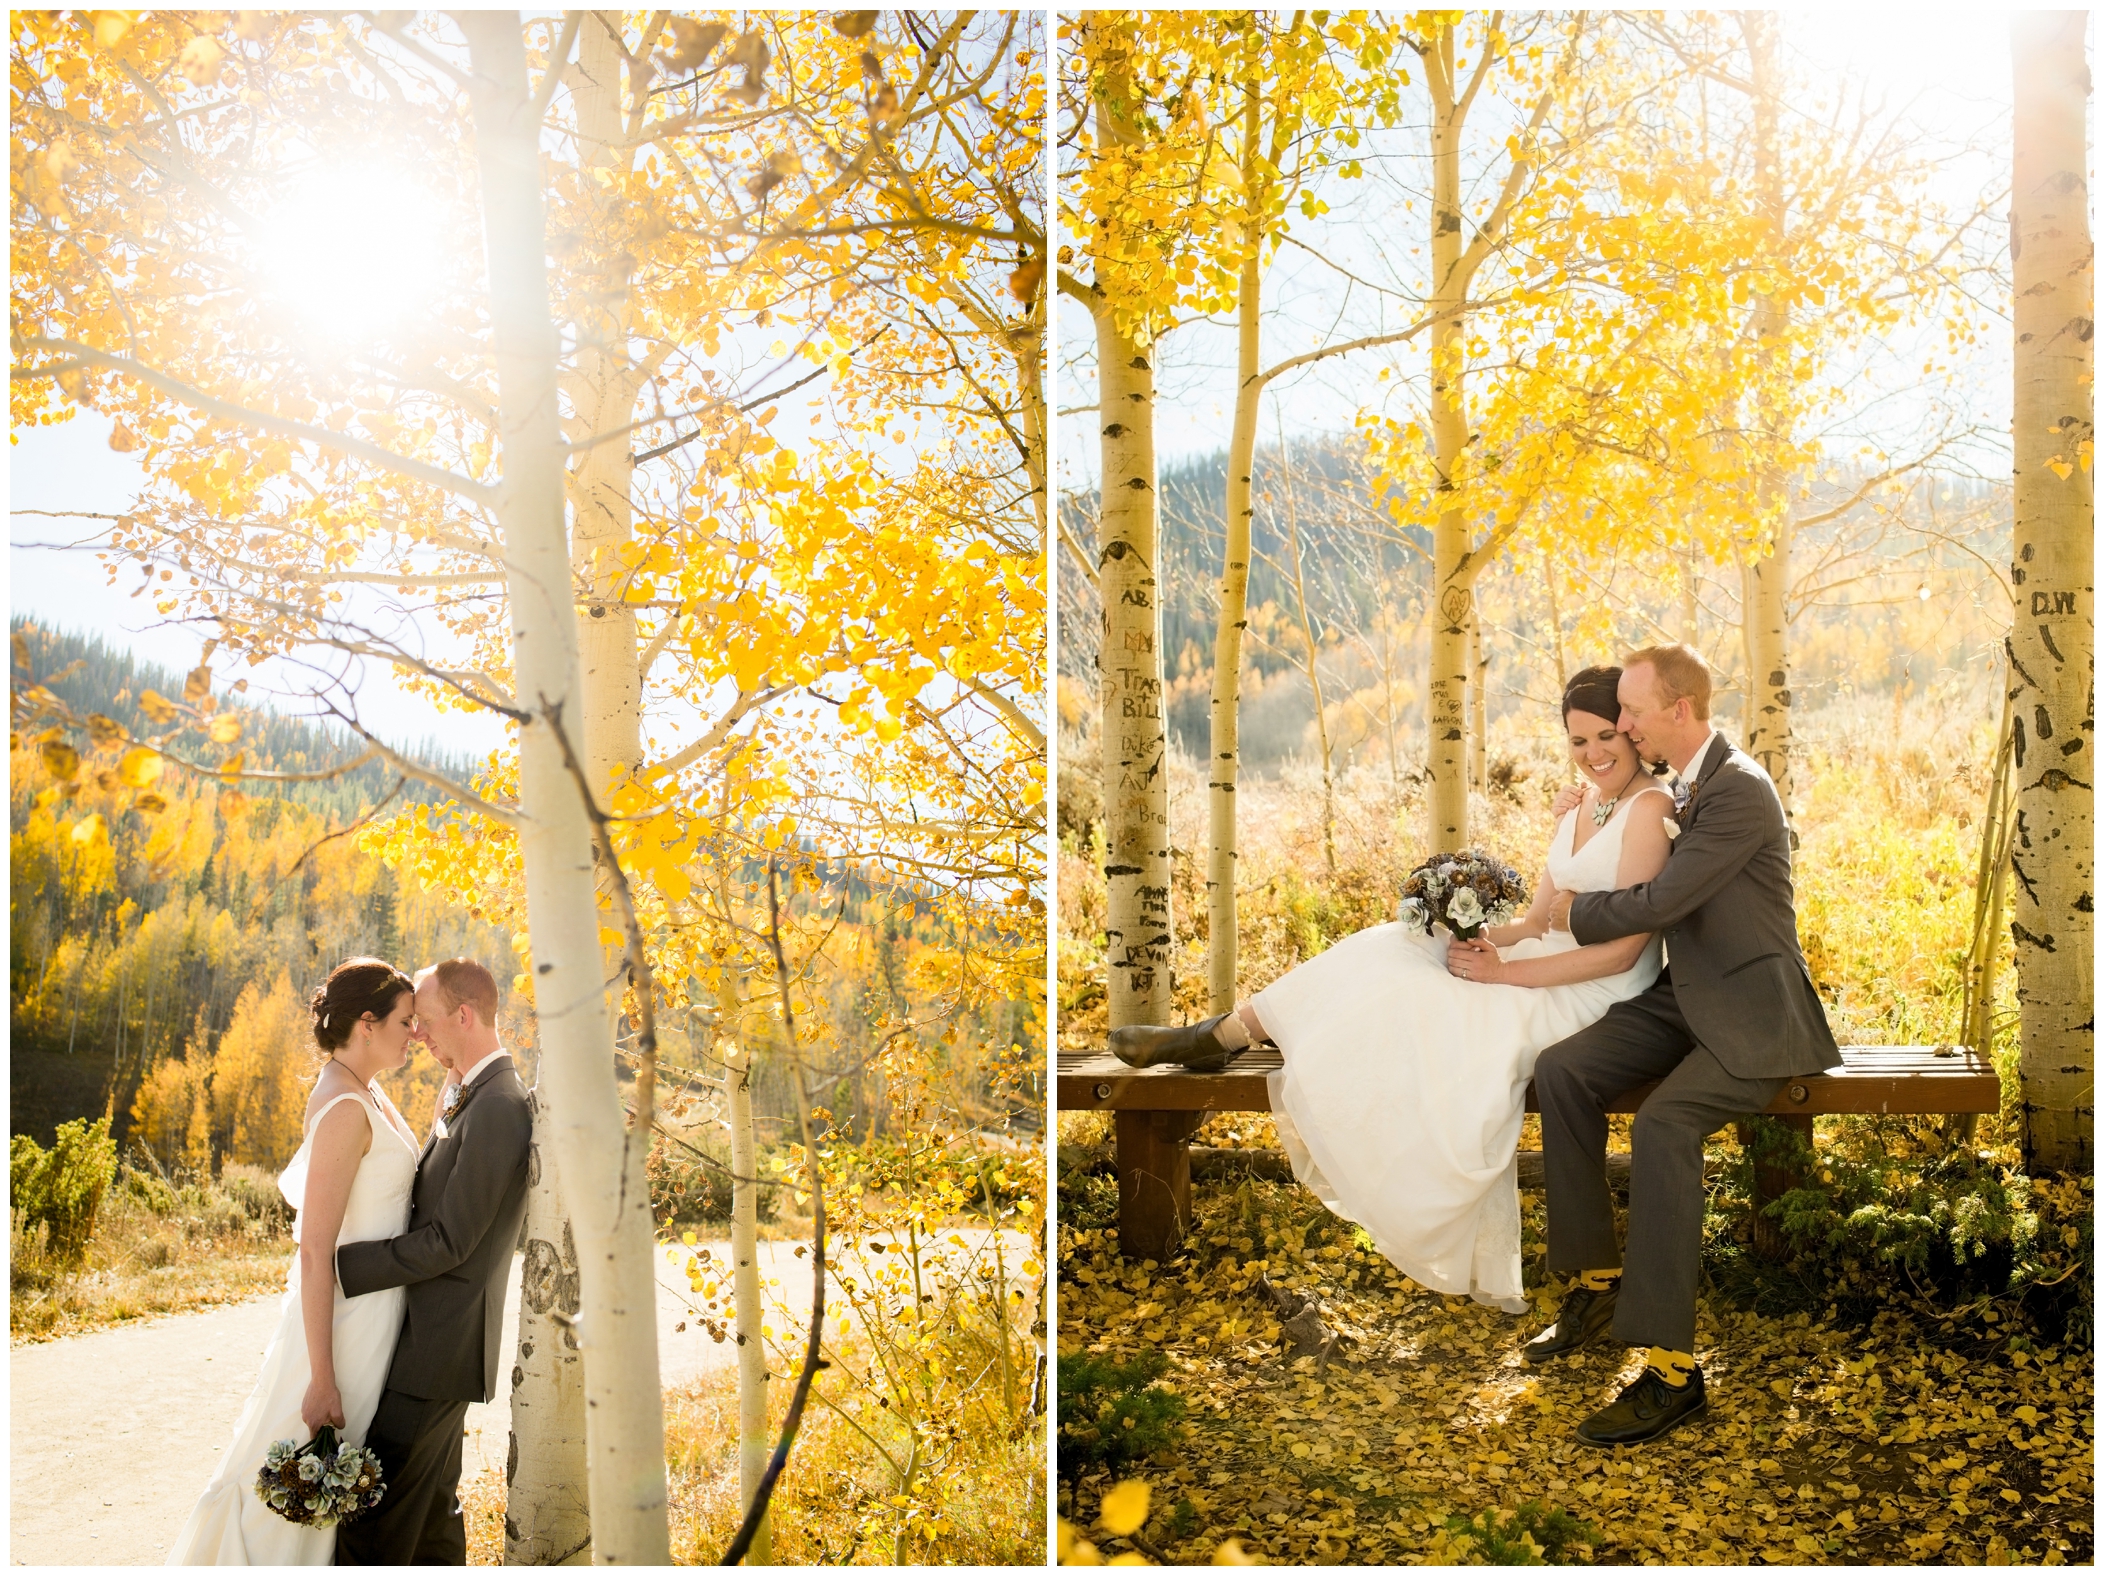 Winter Park Colorado wedding inspiration